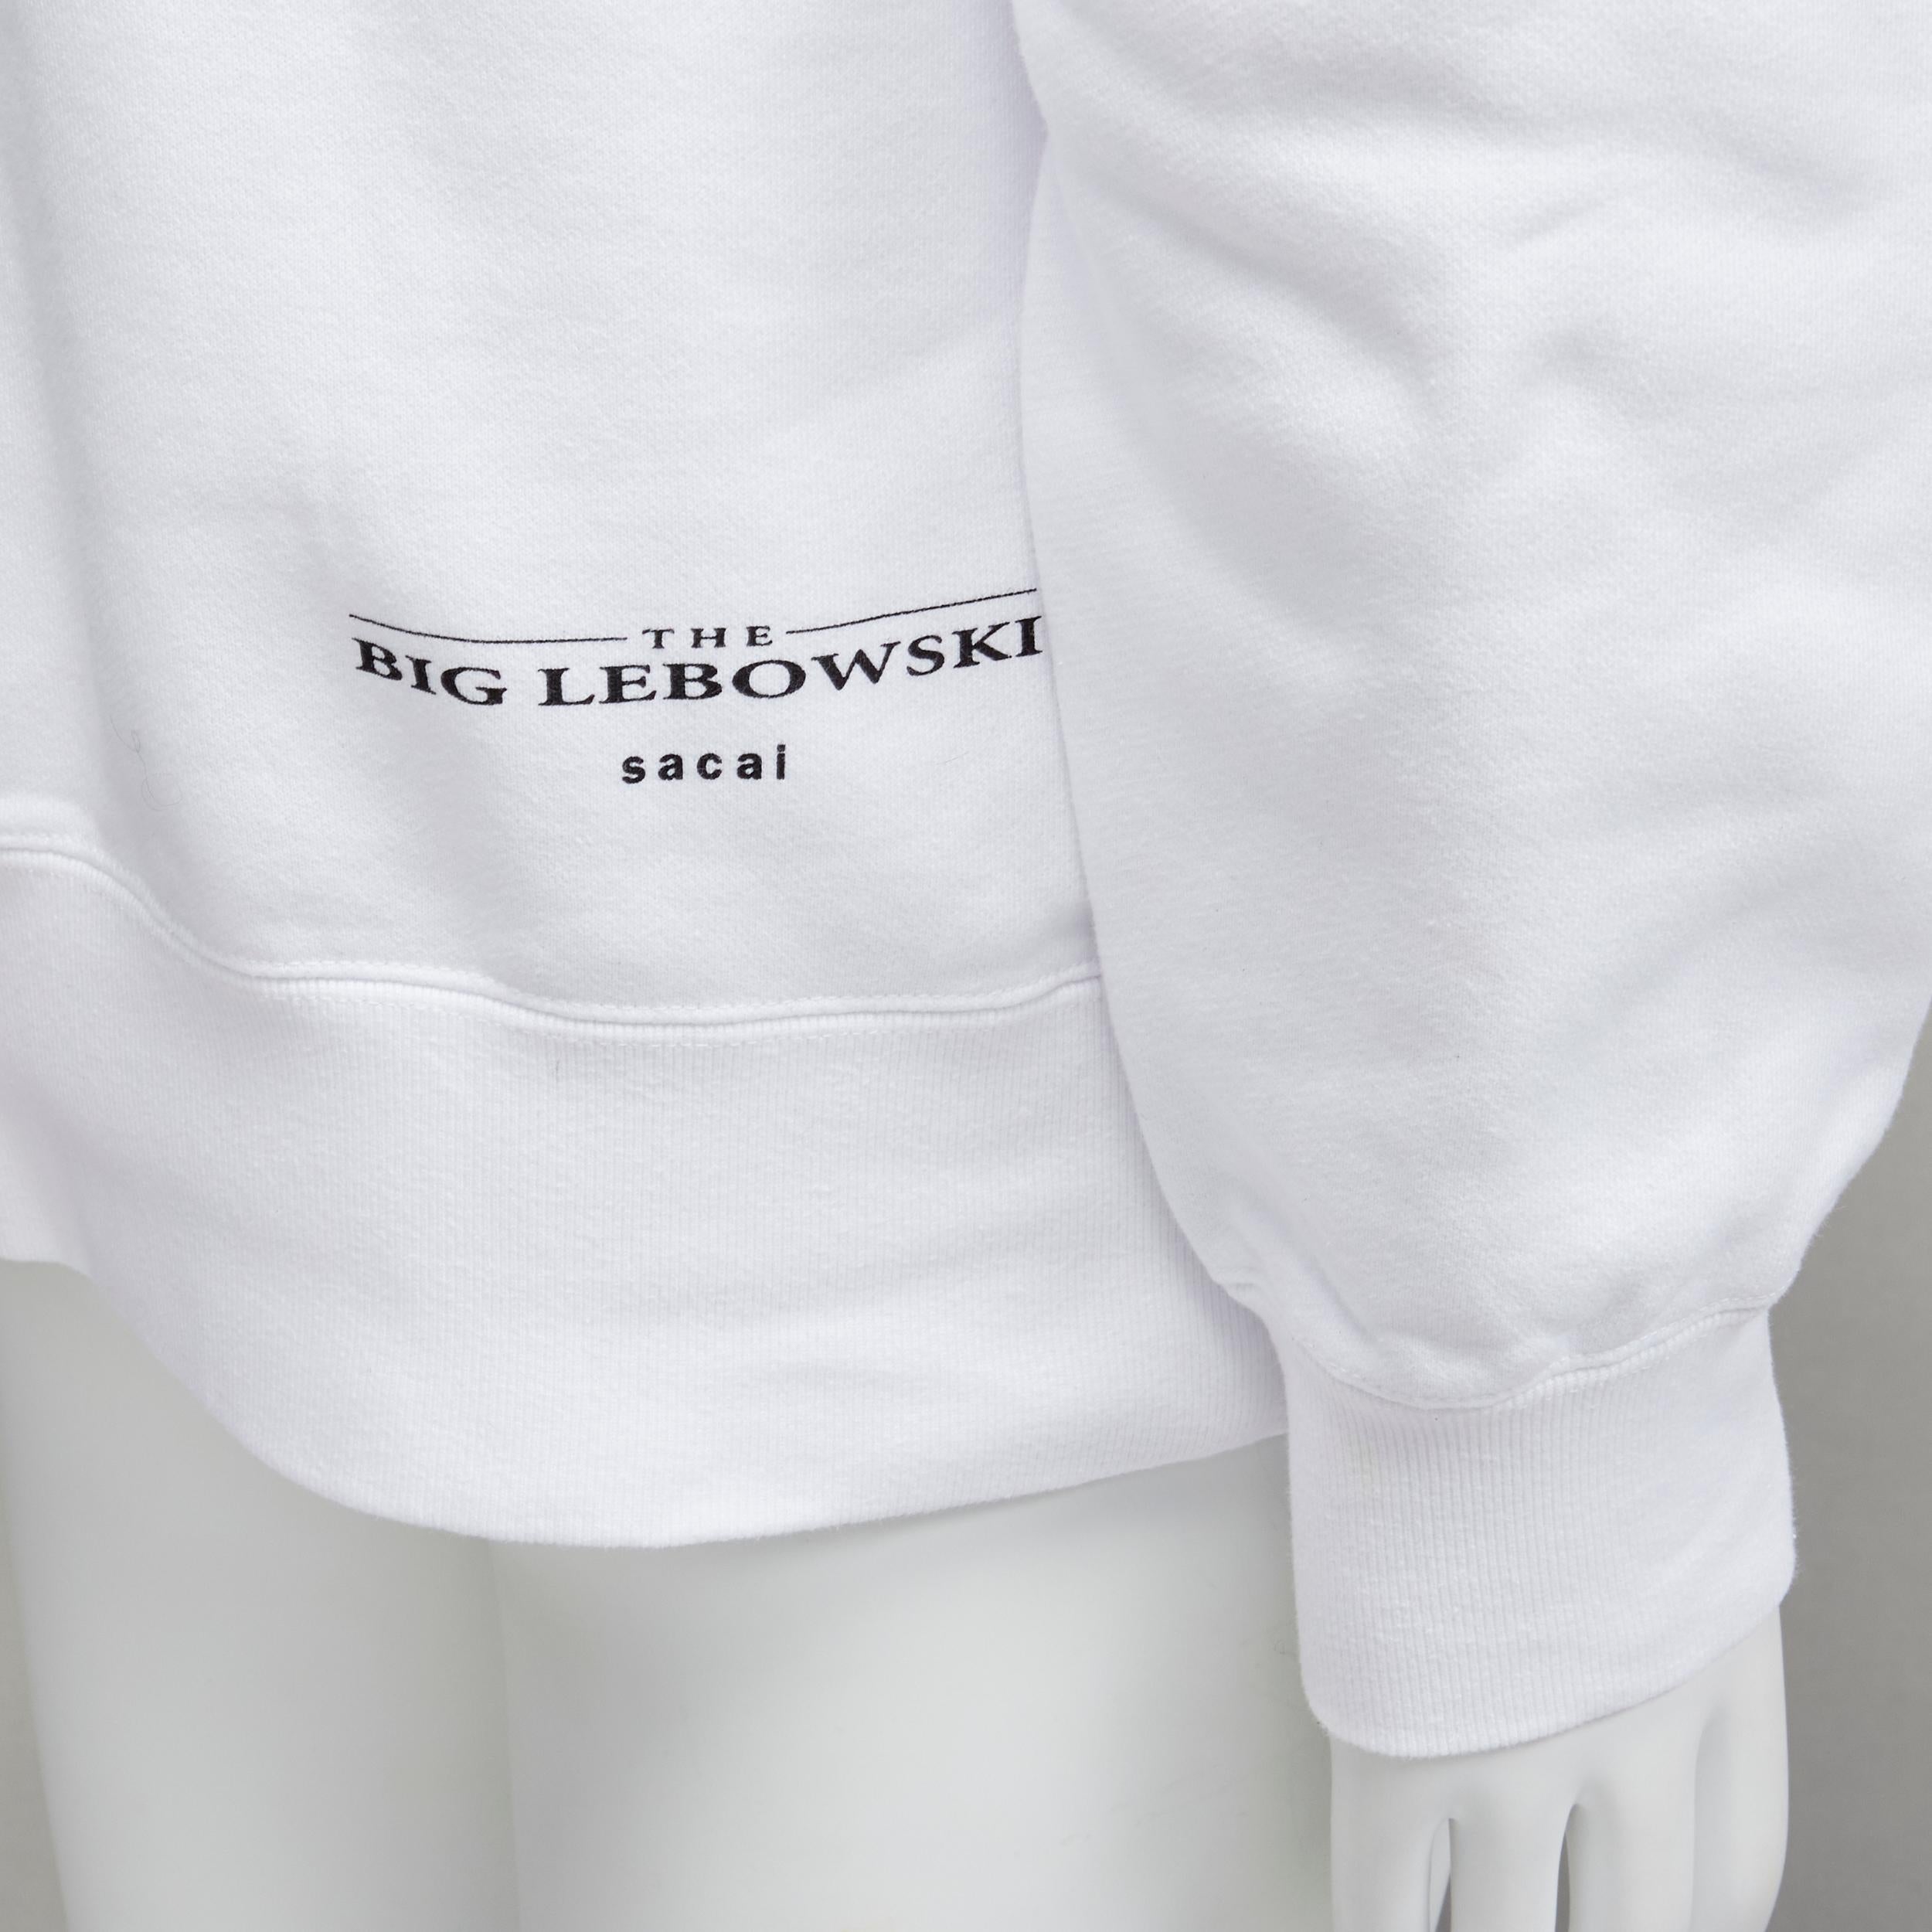 SACAI 2020 Big Lebowski Really Tied Room Together slogan white hoodie Sz.2 M For Sale 2